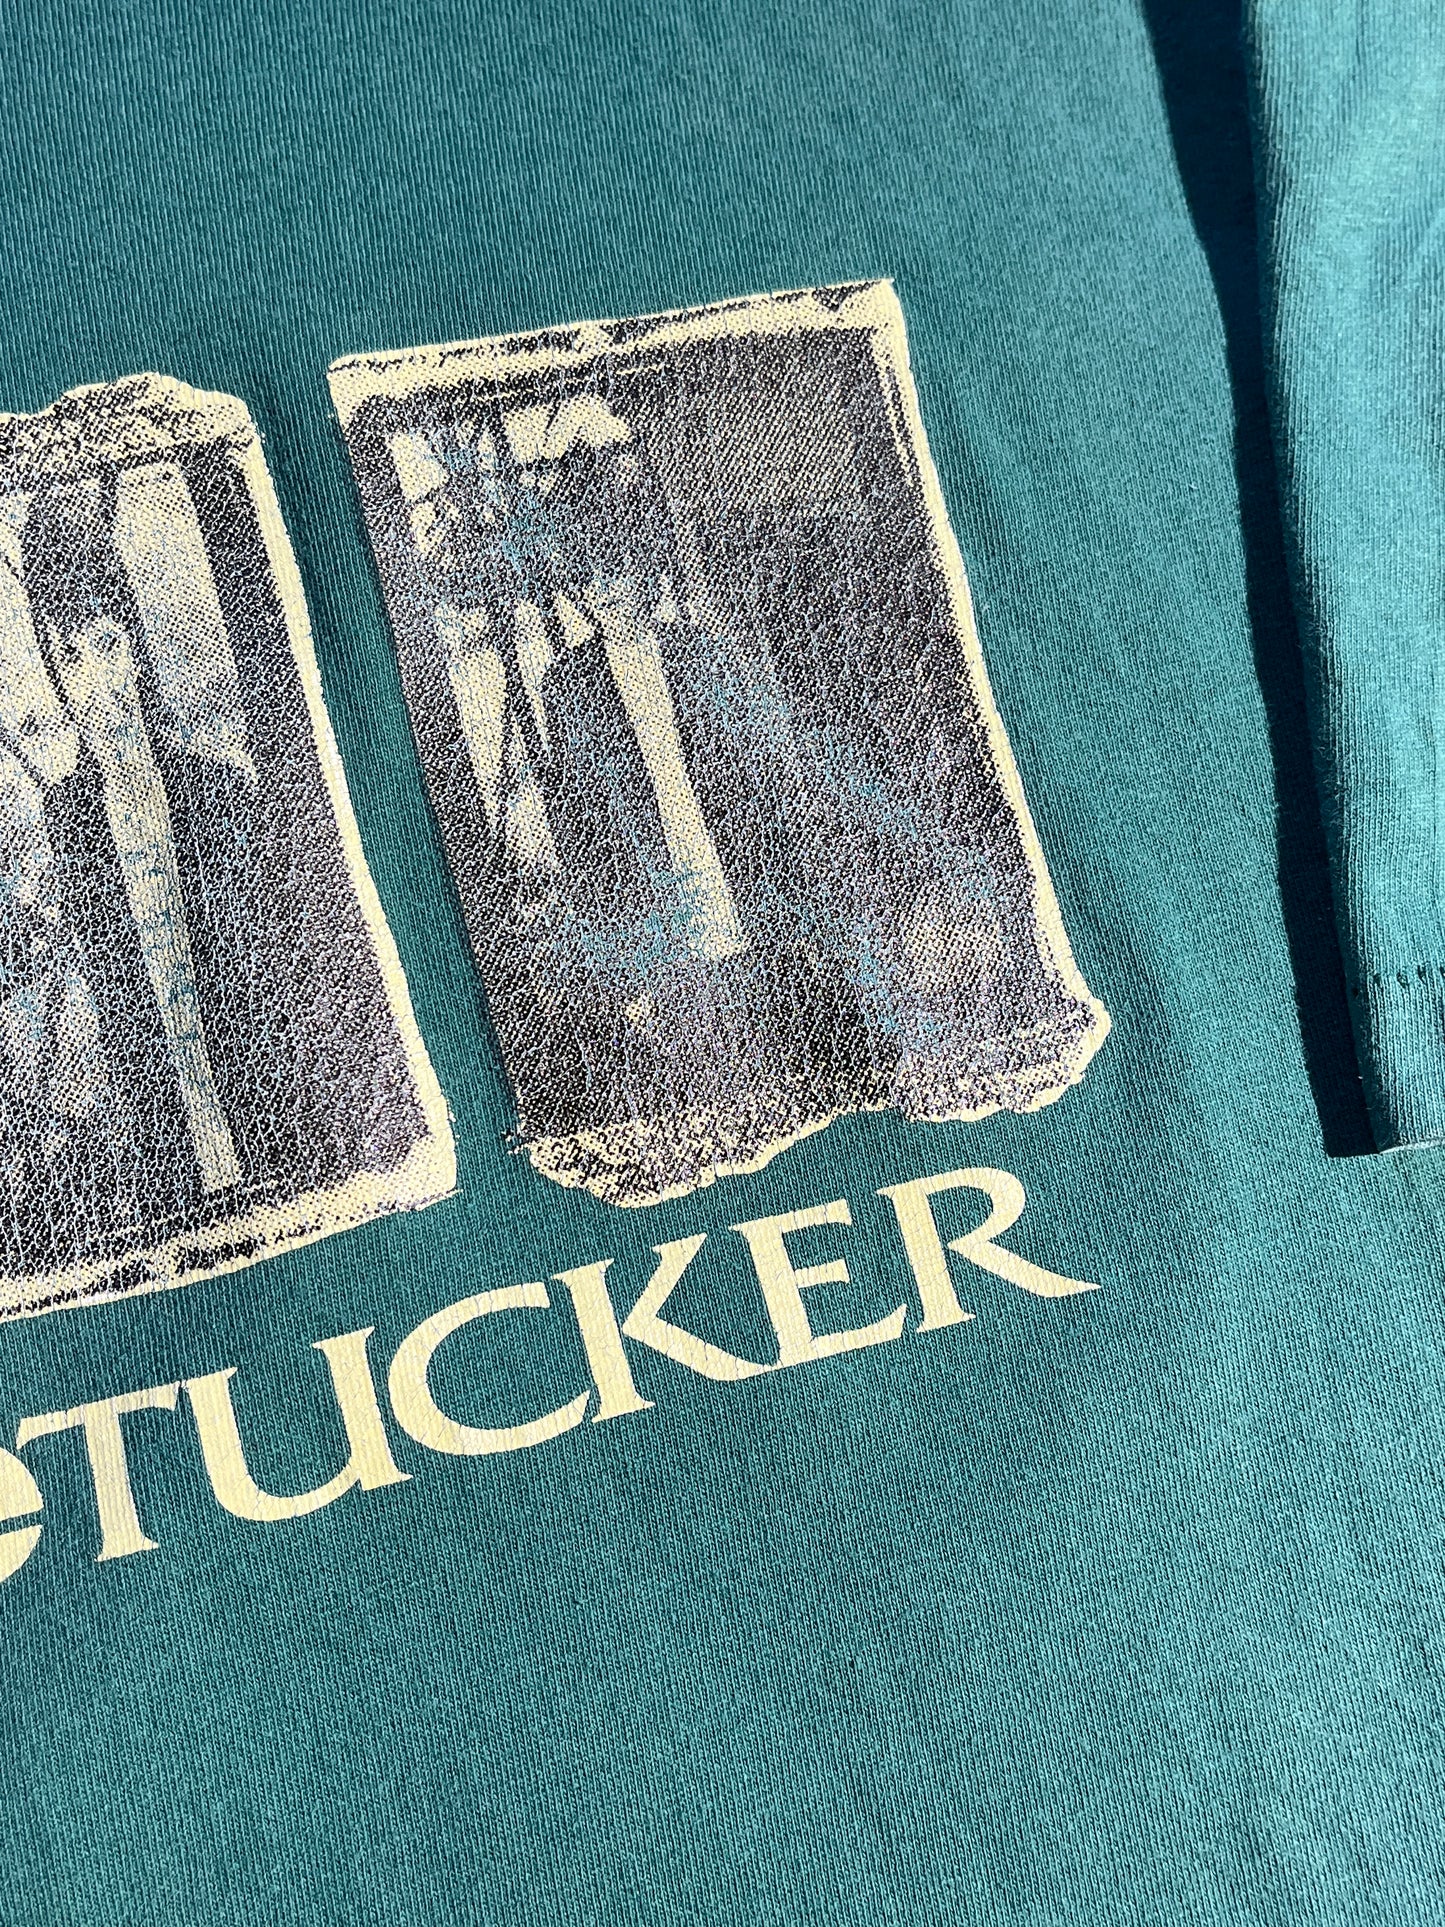 Vintage Moe Tucker T-Shirt Tour 90's Promo